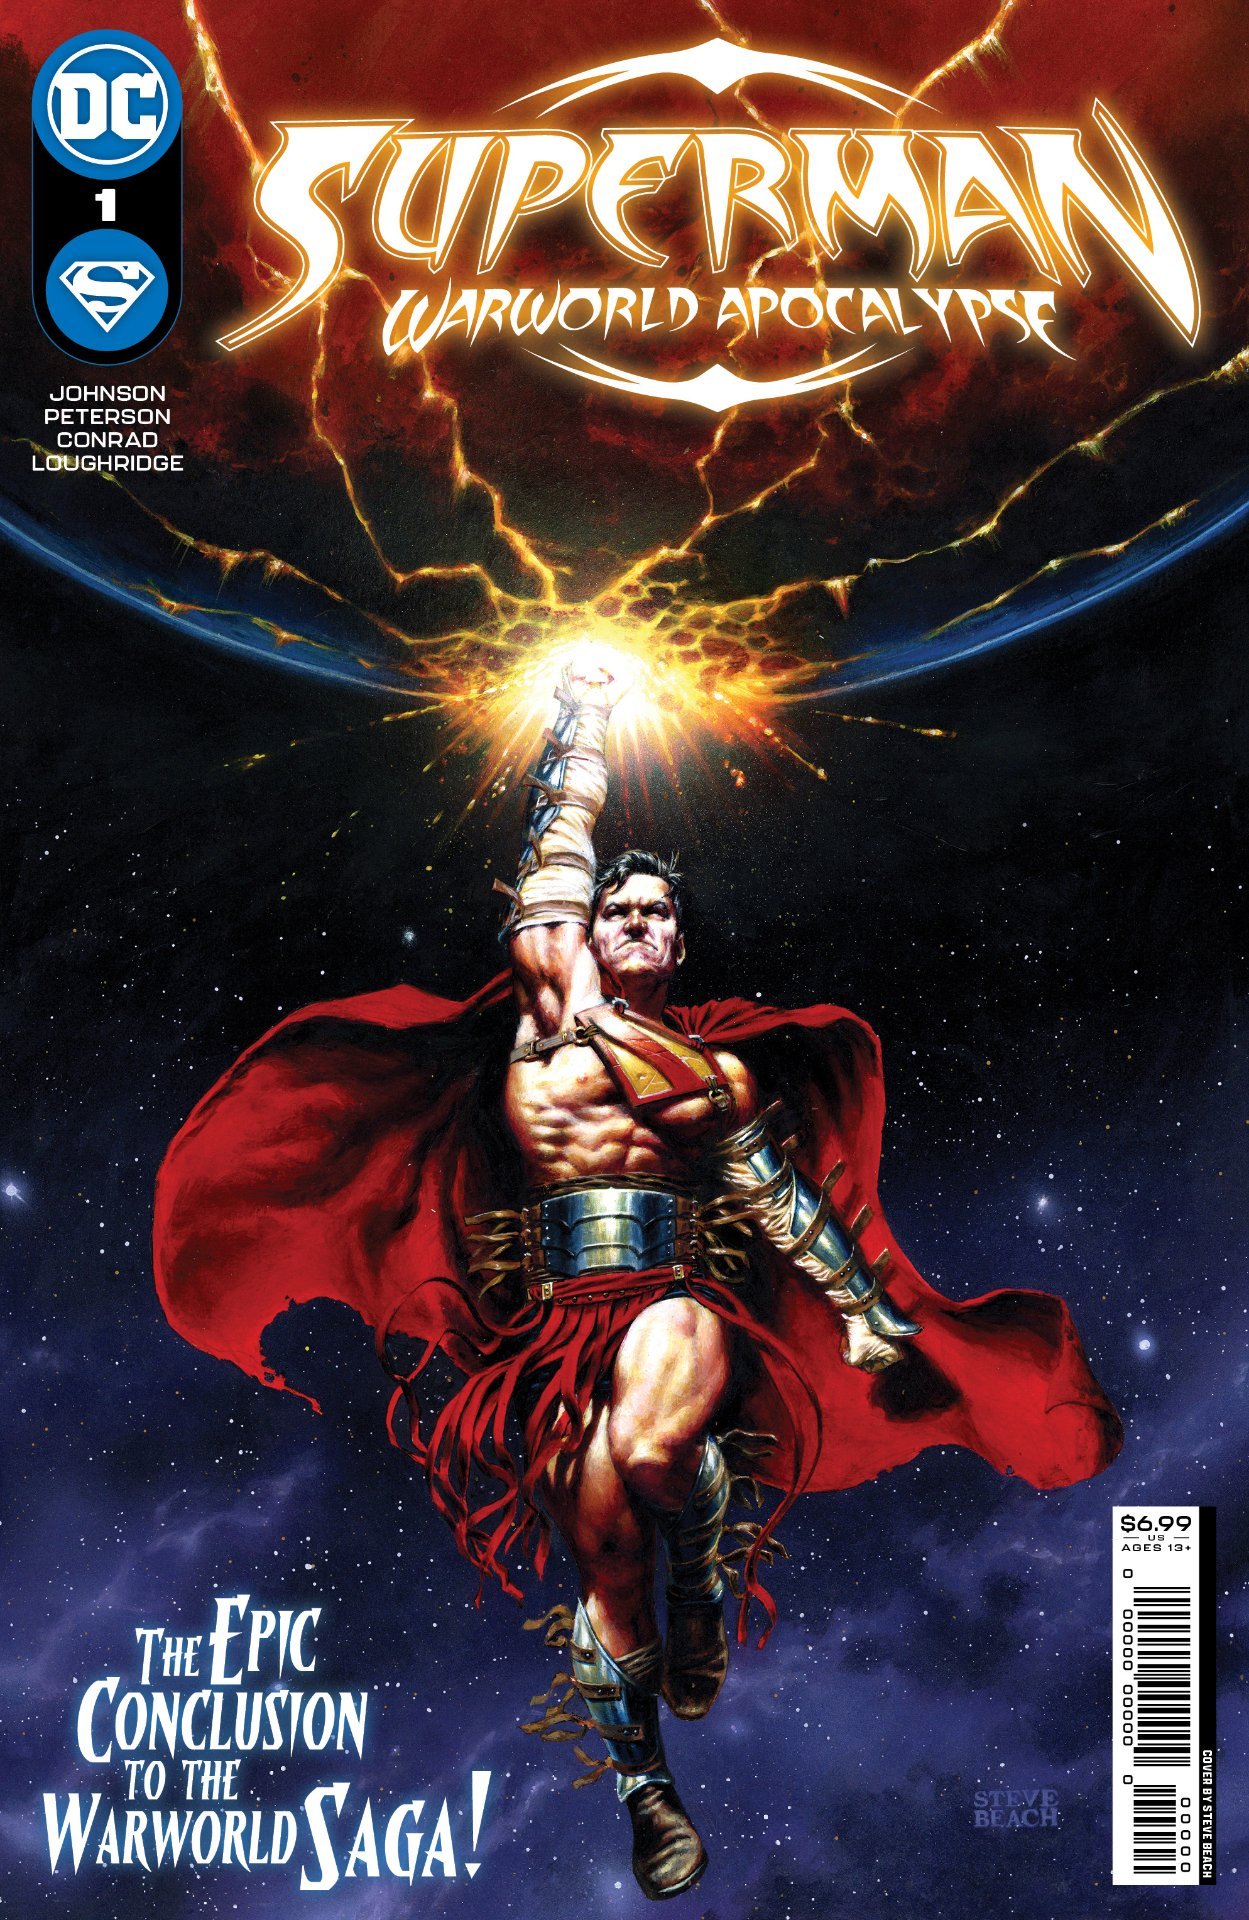 Cover di Superman: Warworld Apocalypse di Steve Beach